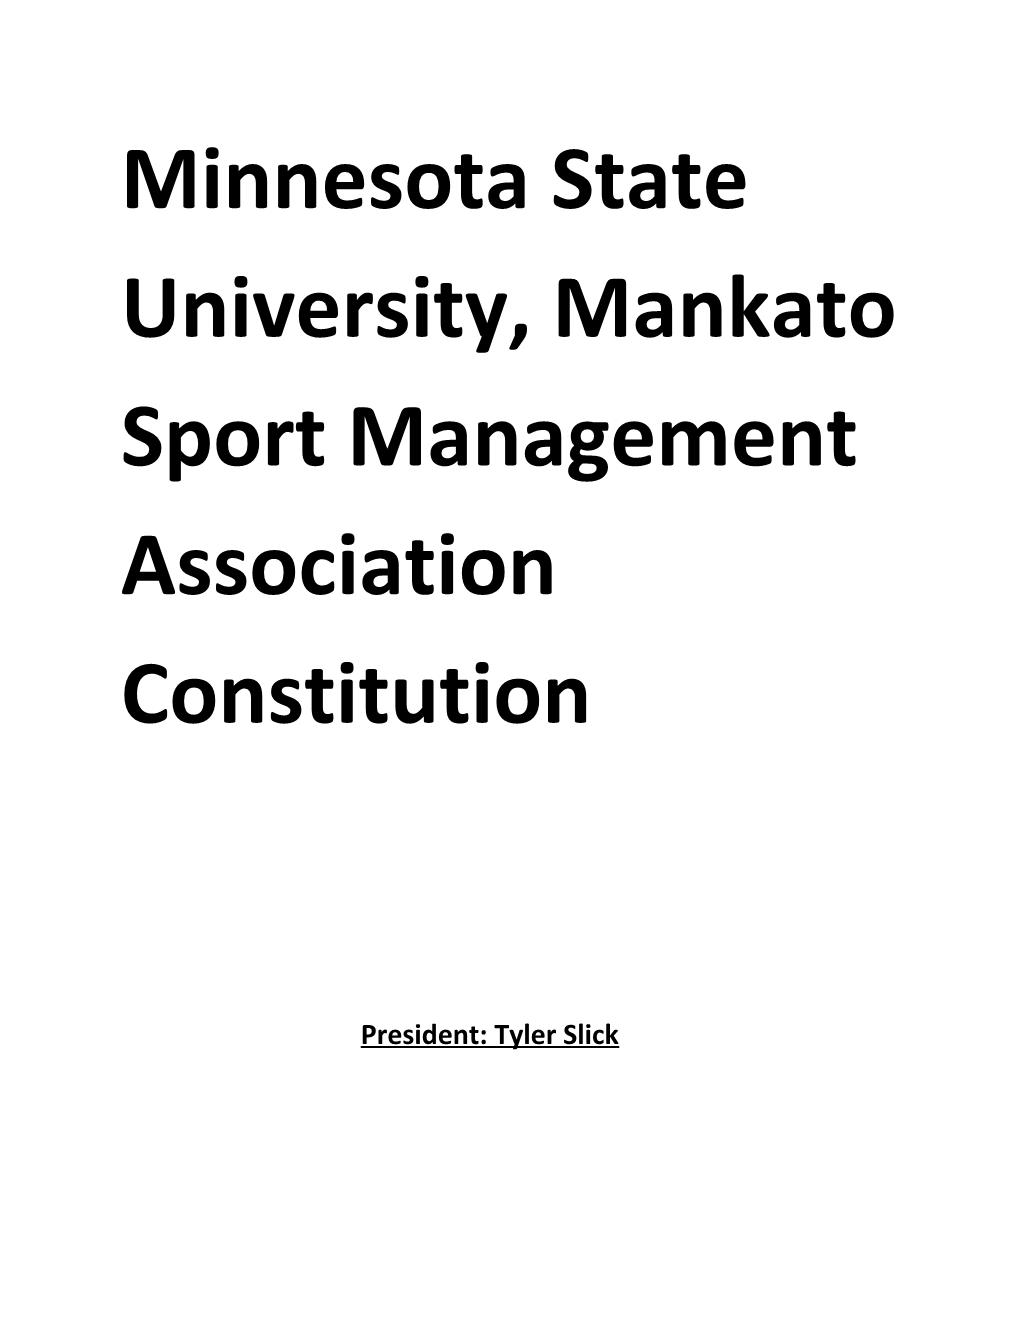 Minnesota State University, Mankato Sport Management Association Constitution